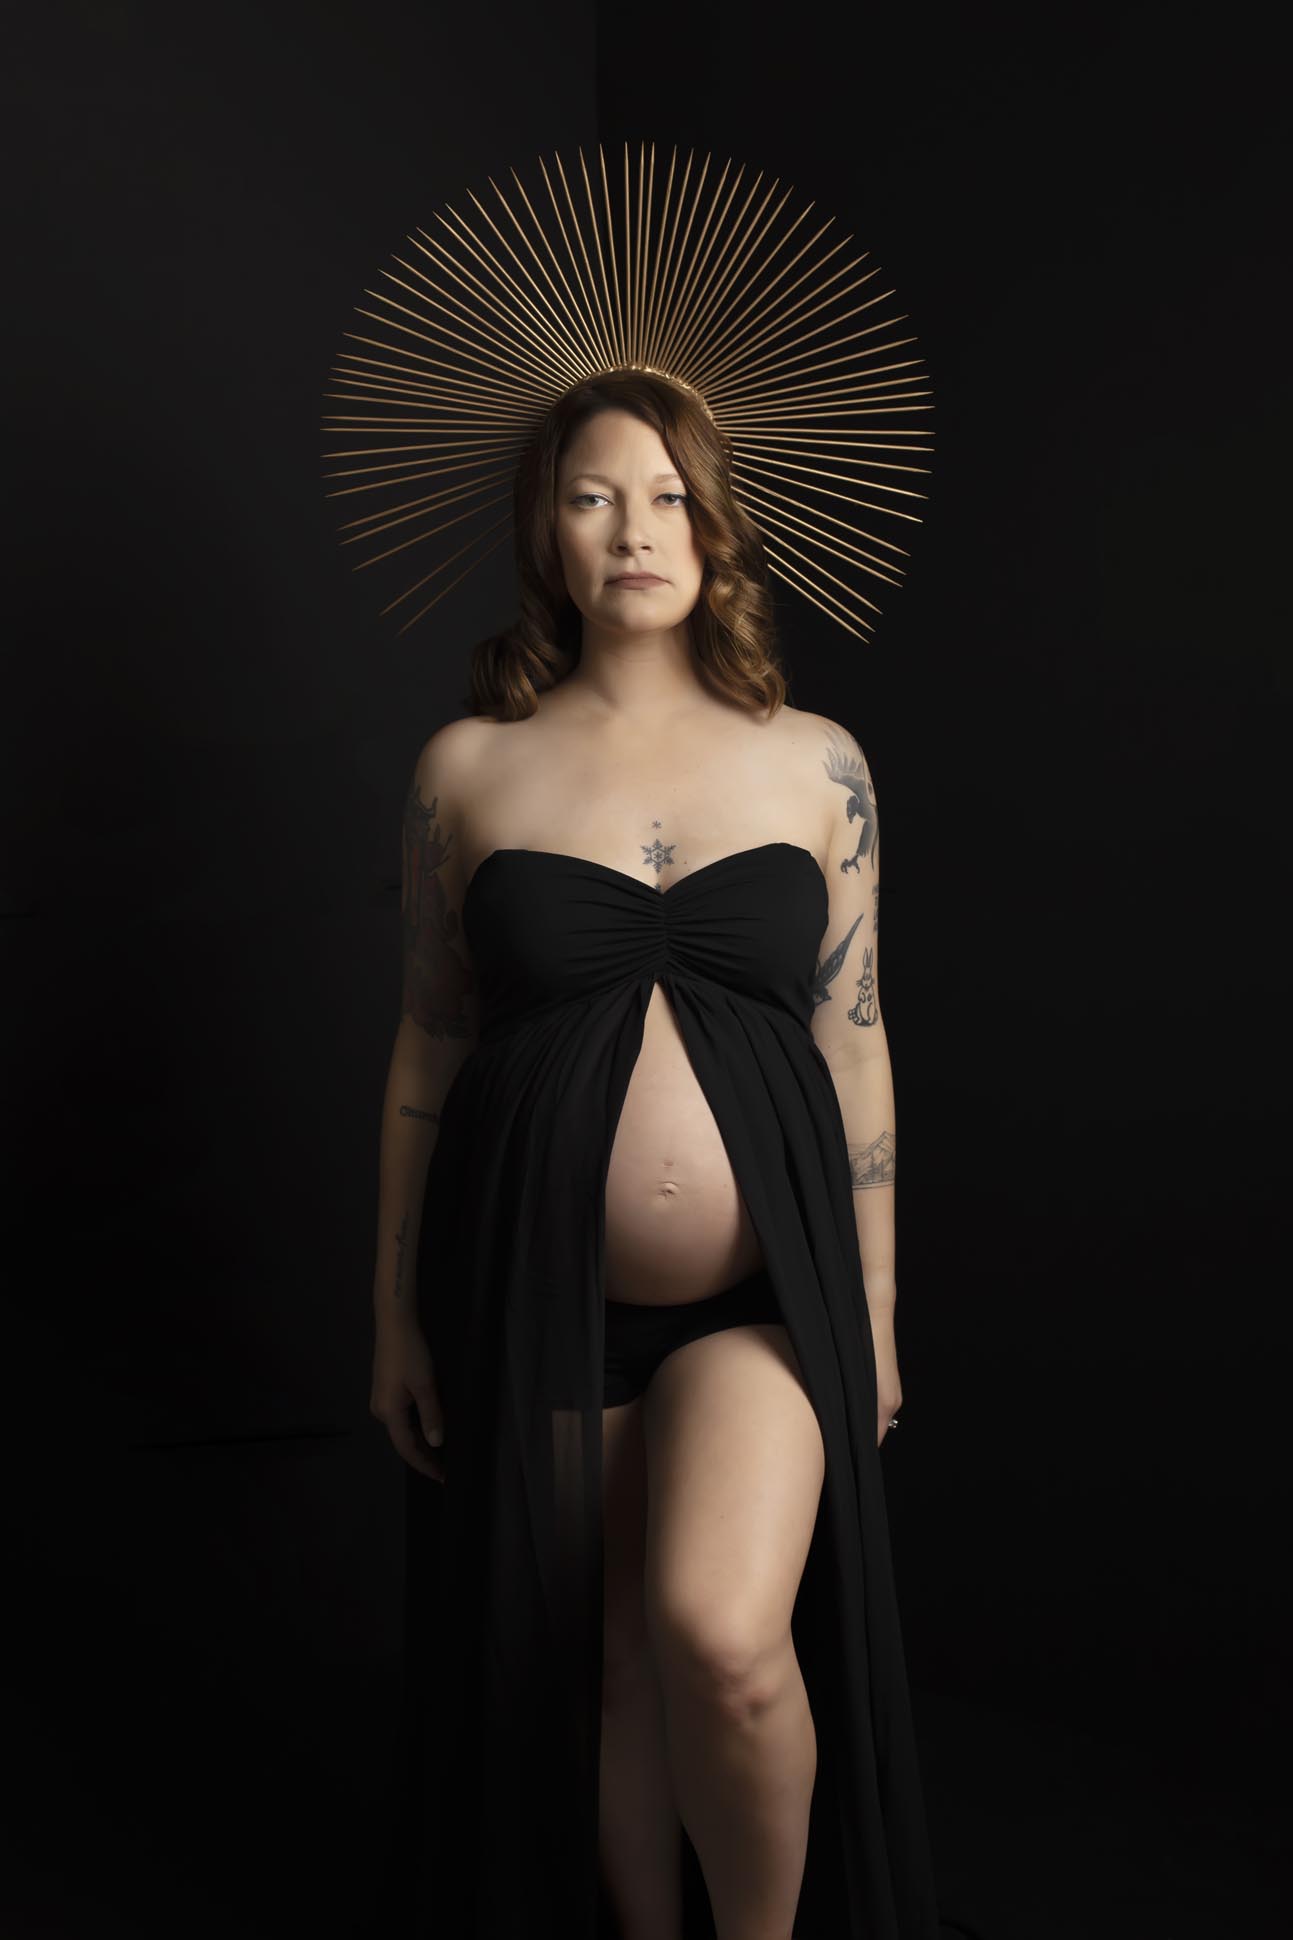 Dallas maternity photographer shares portrait